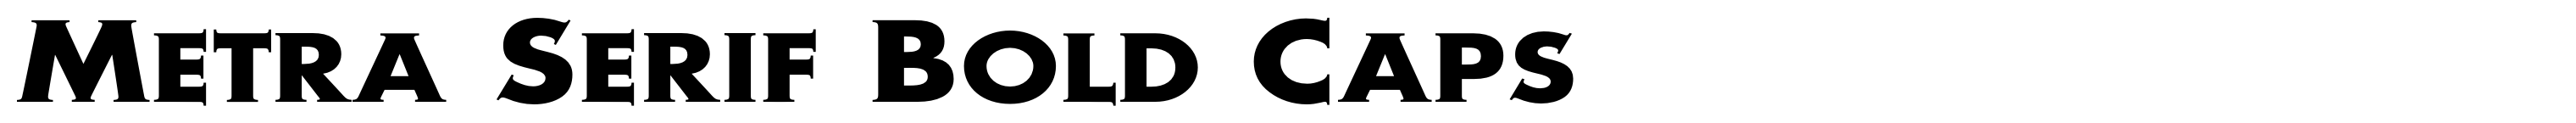 Metra Serif Bold Caps